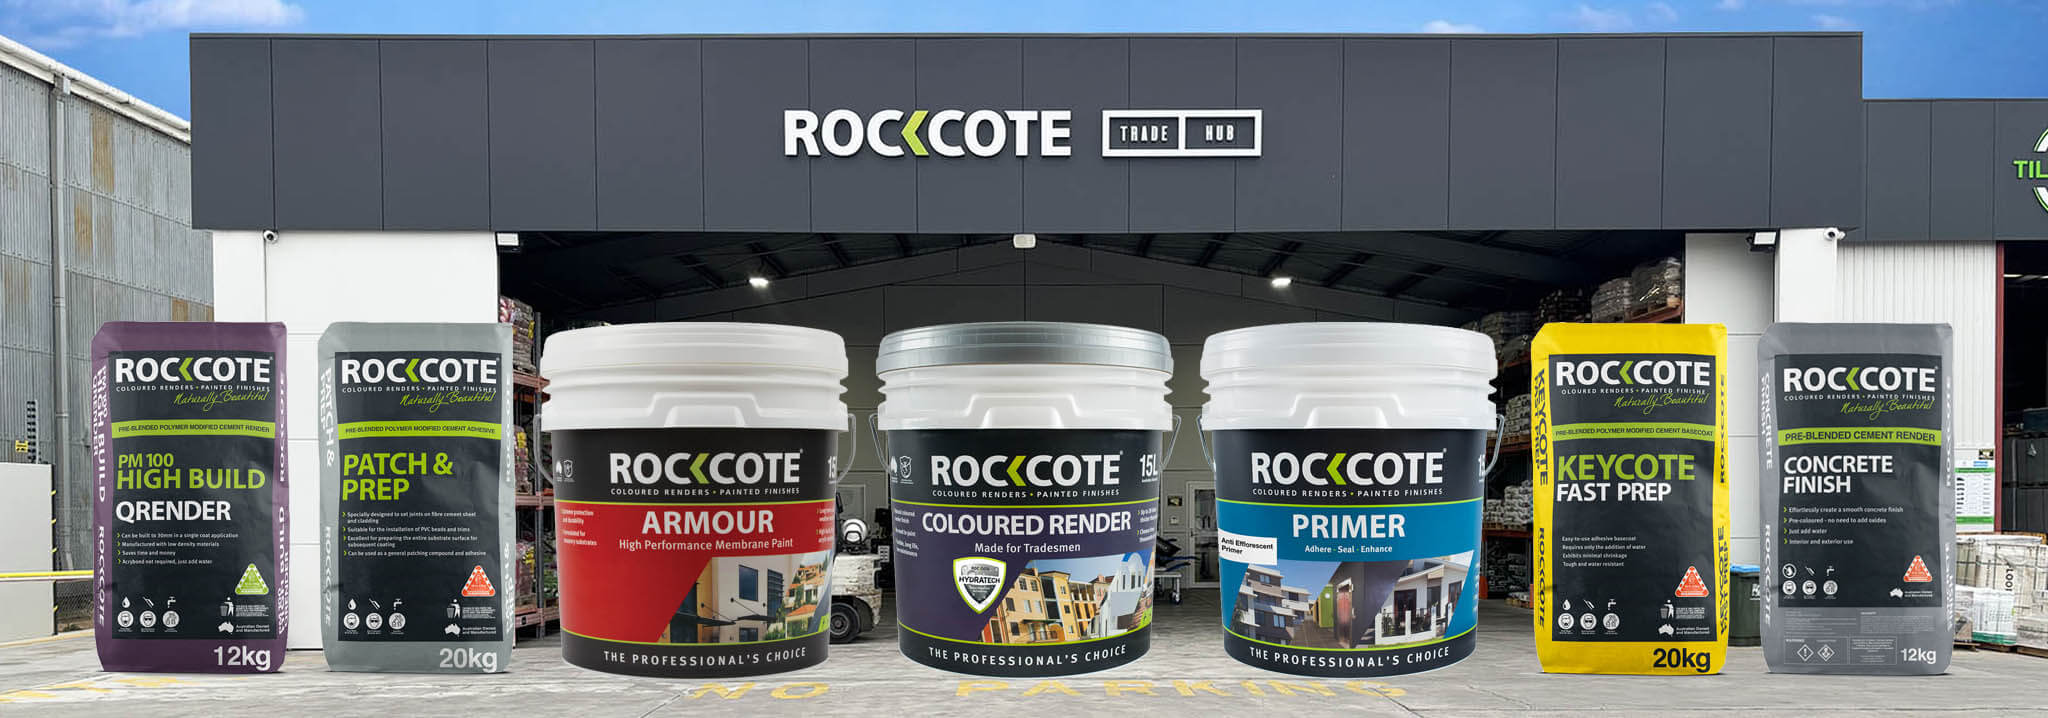 Rockcote Render Range now available at Tile Centre